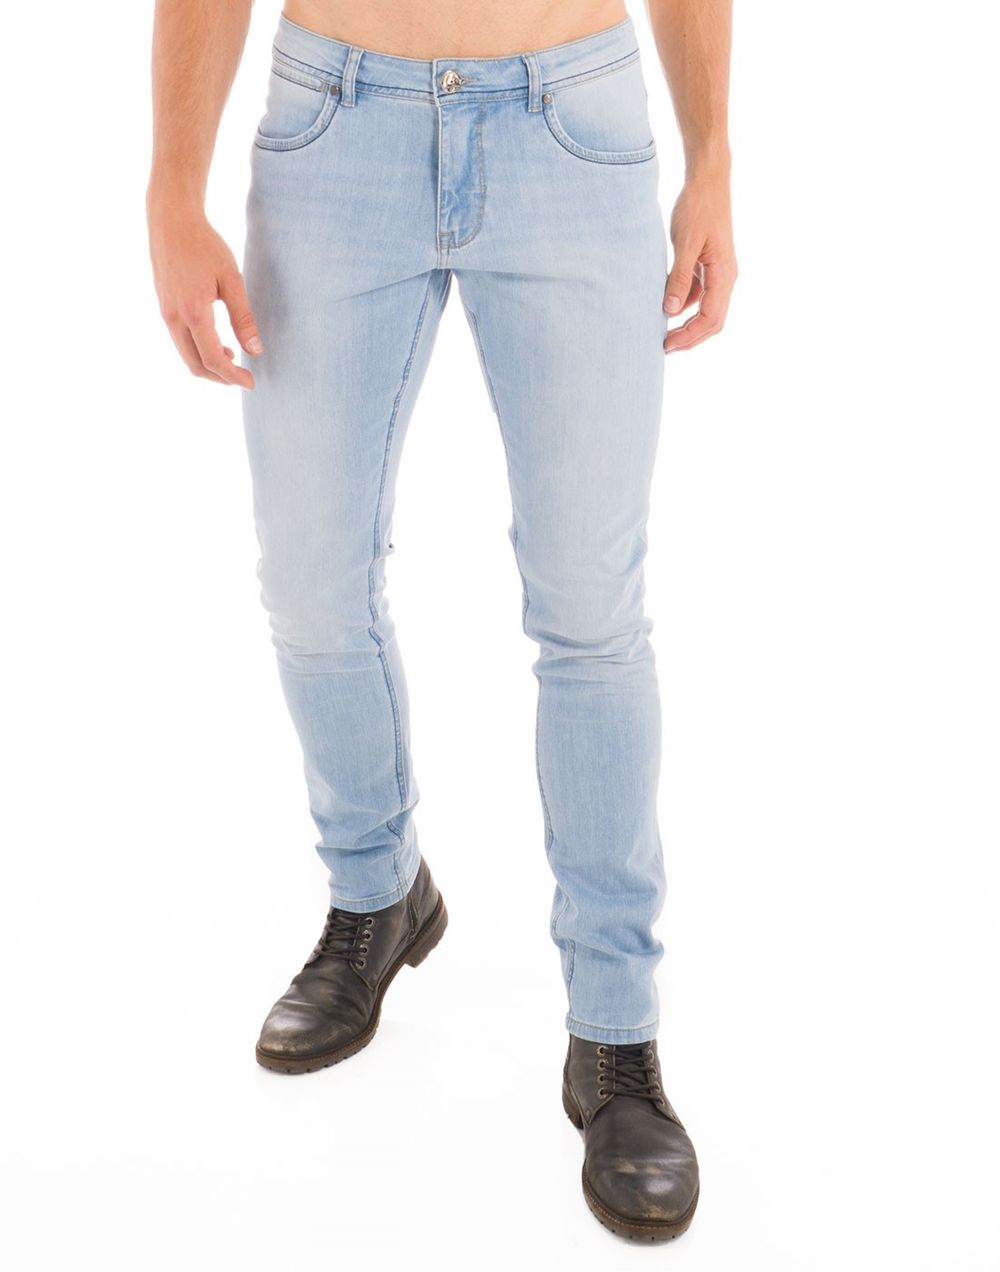 jeans personalizado